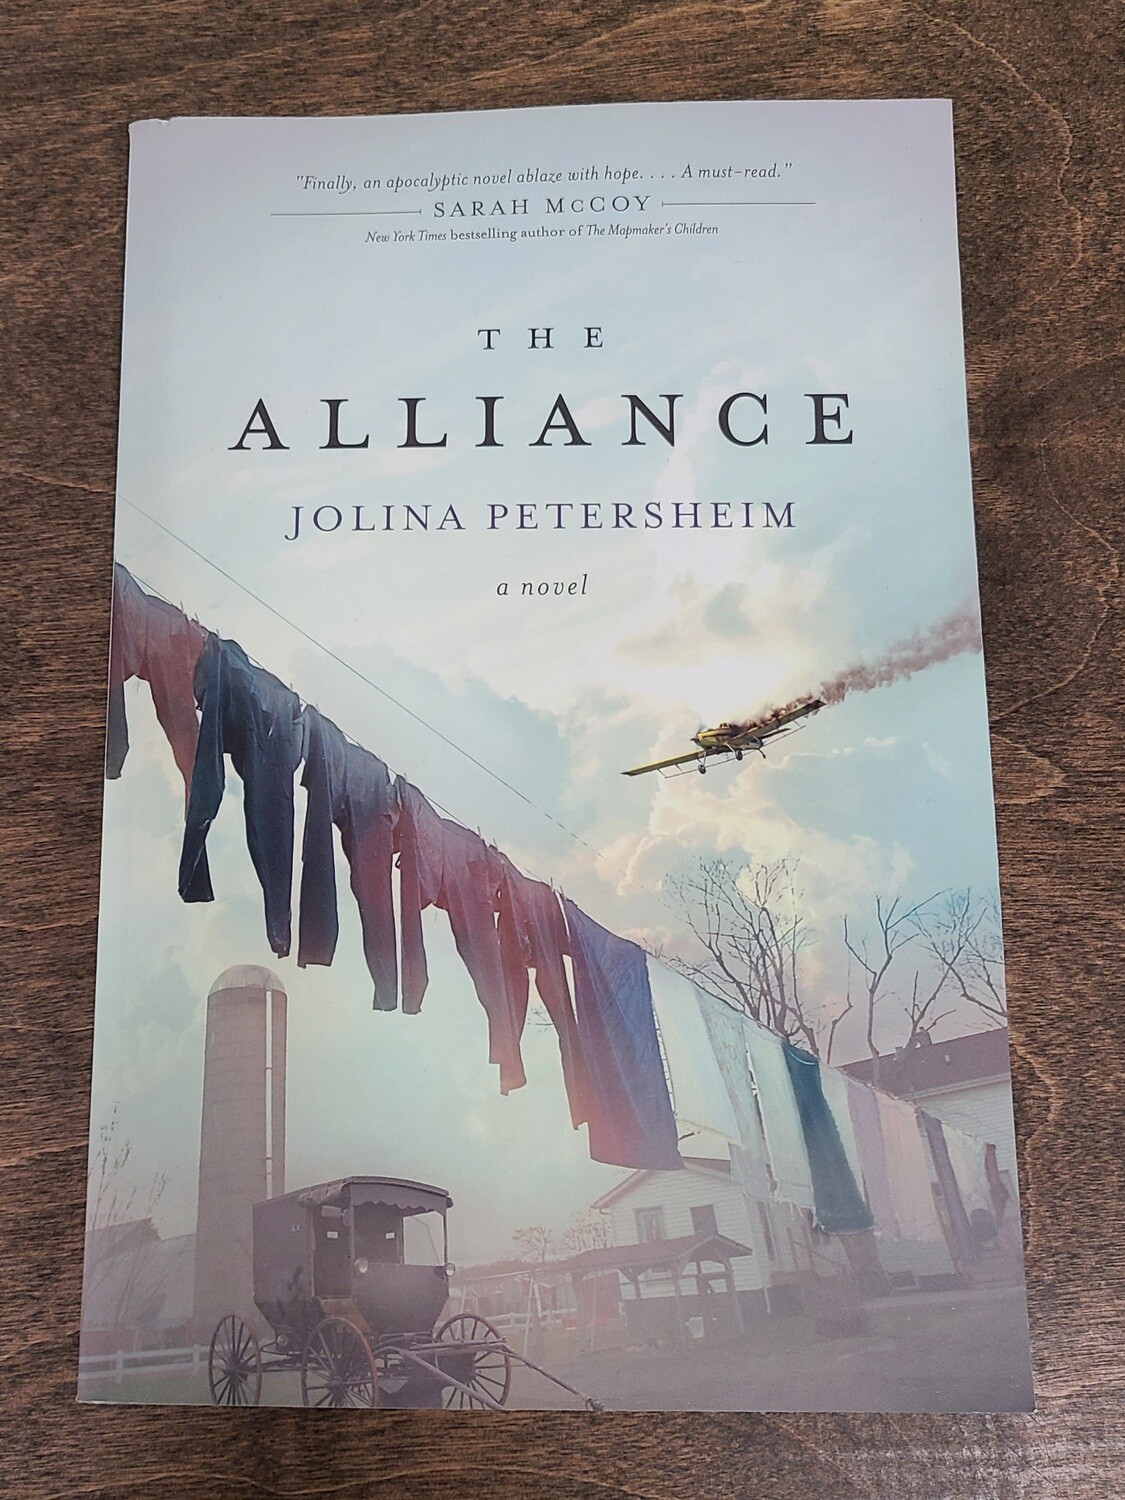 The Alliance by Jolina Petersheim